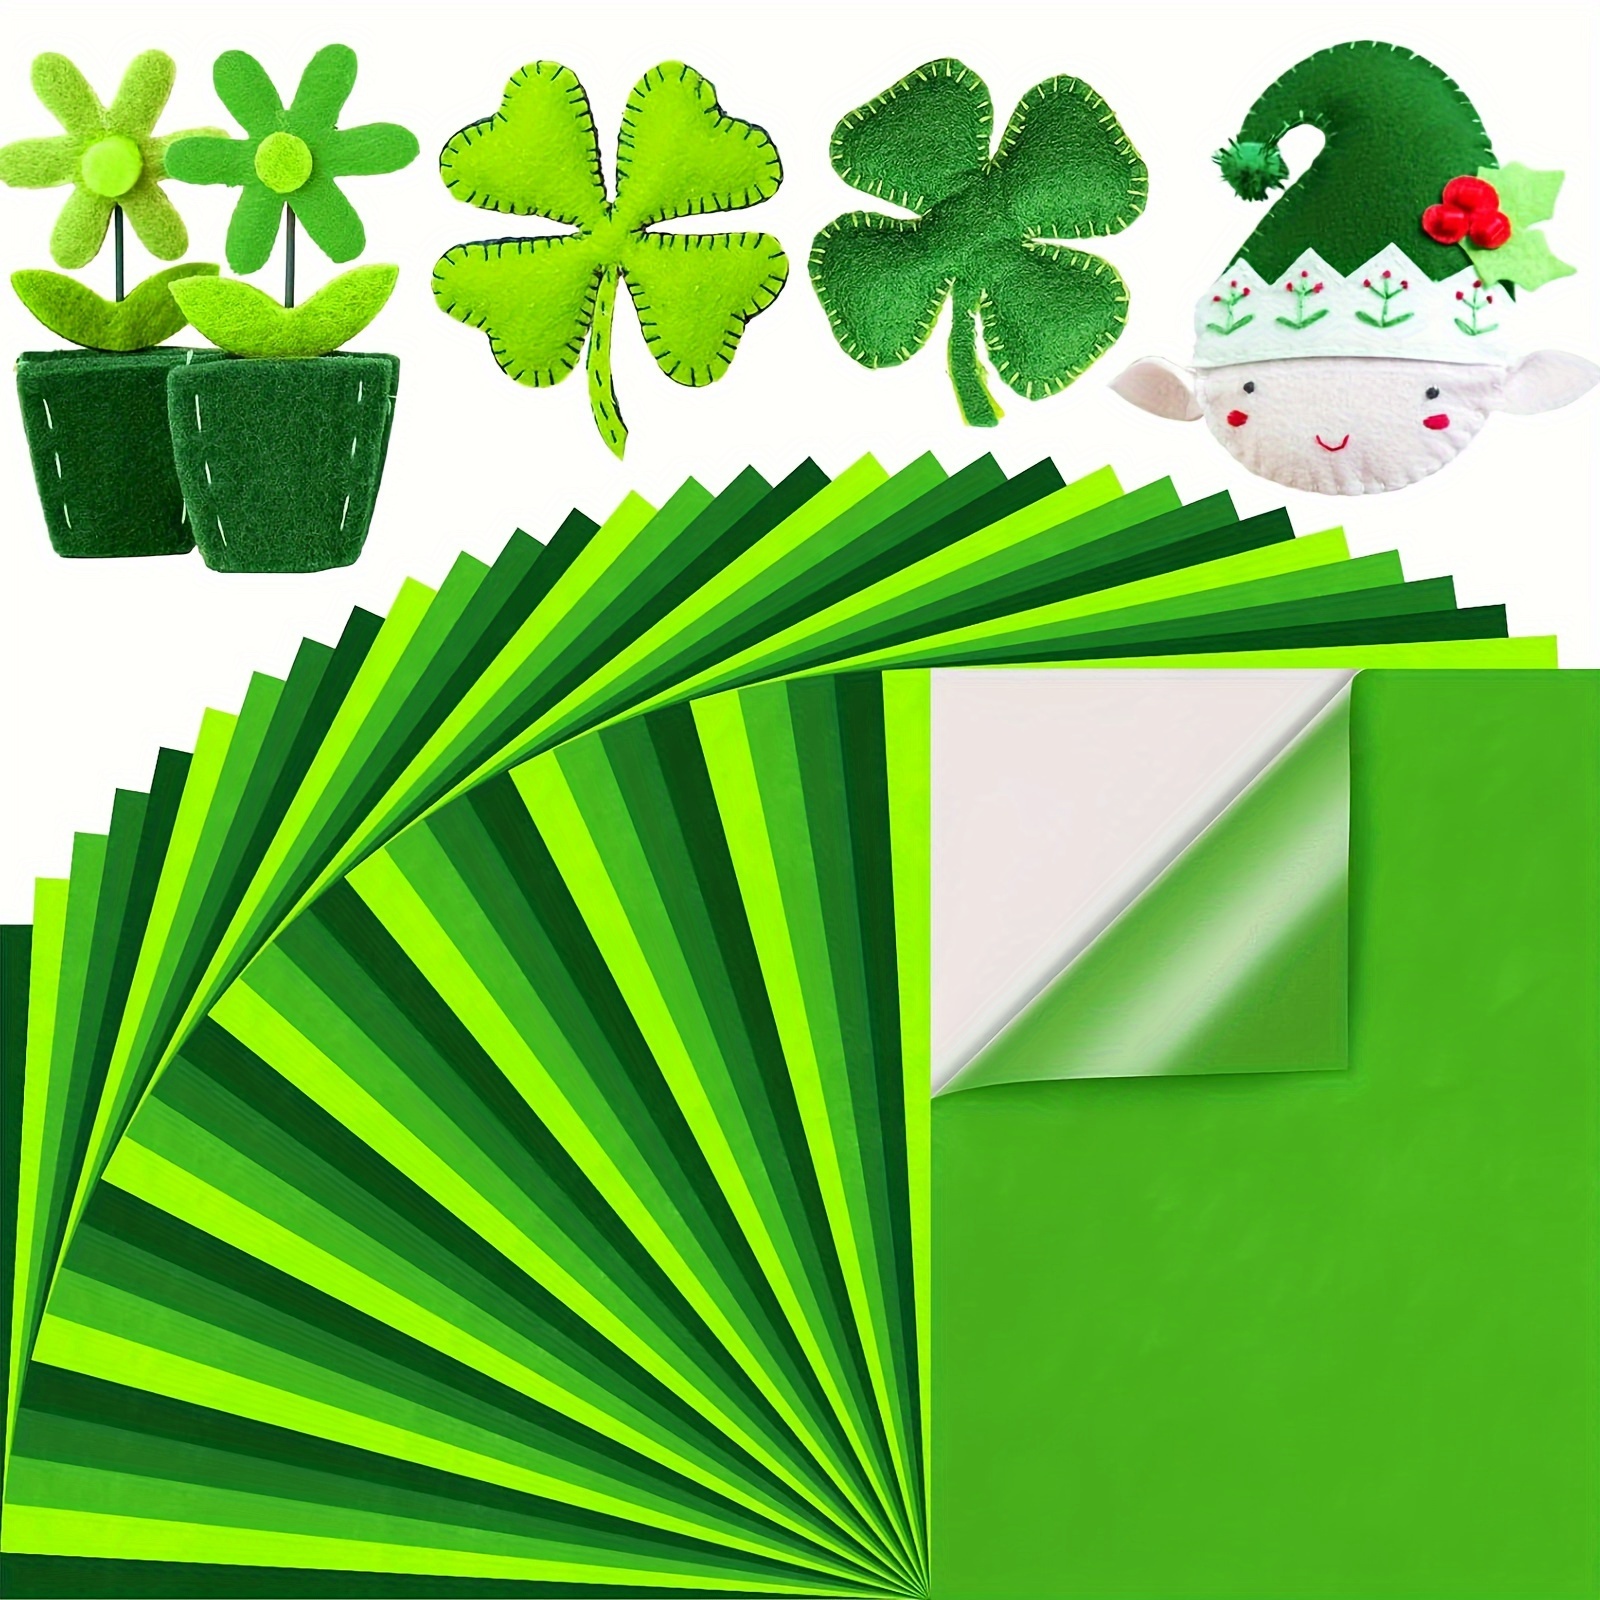 Self-Adhesive Green Felt Sheets - DIY Crafting & Decoration - A4 Size 